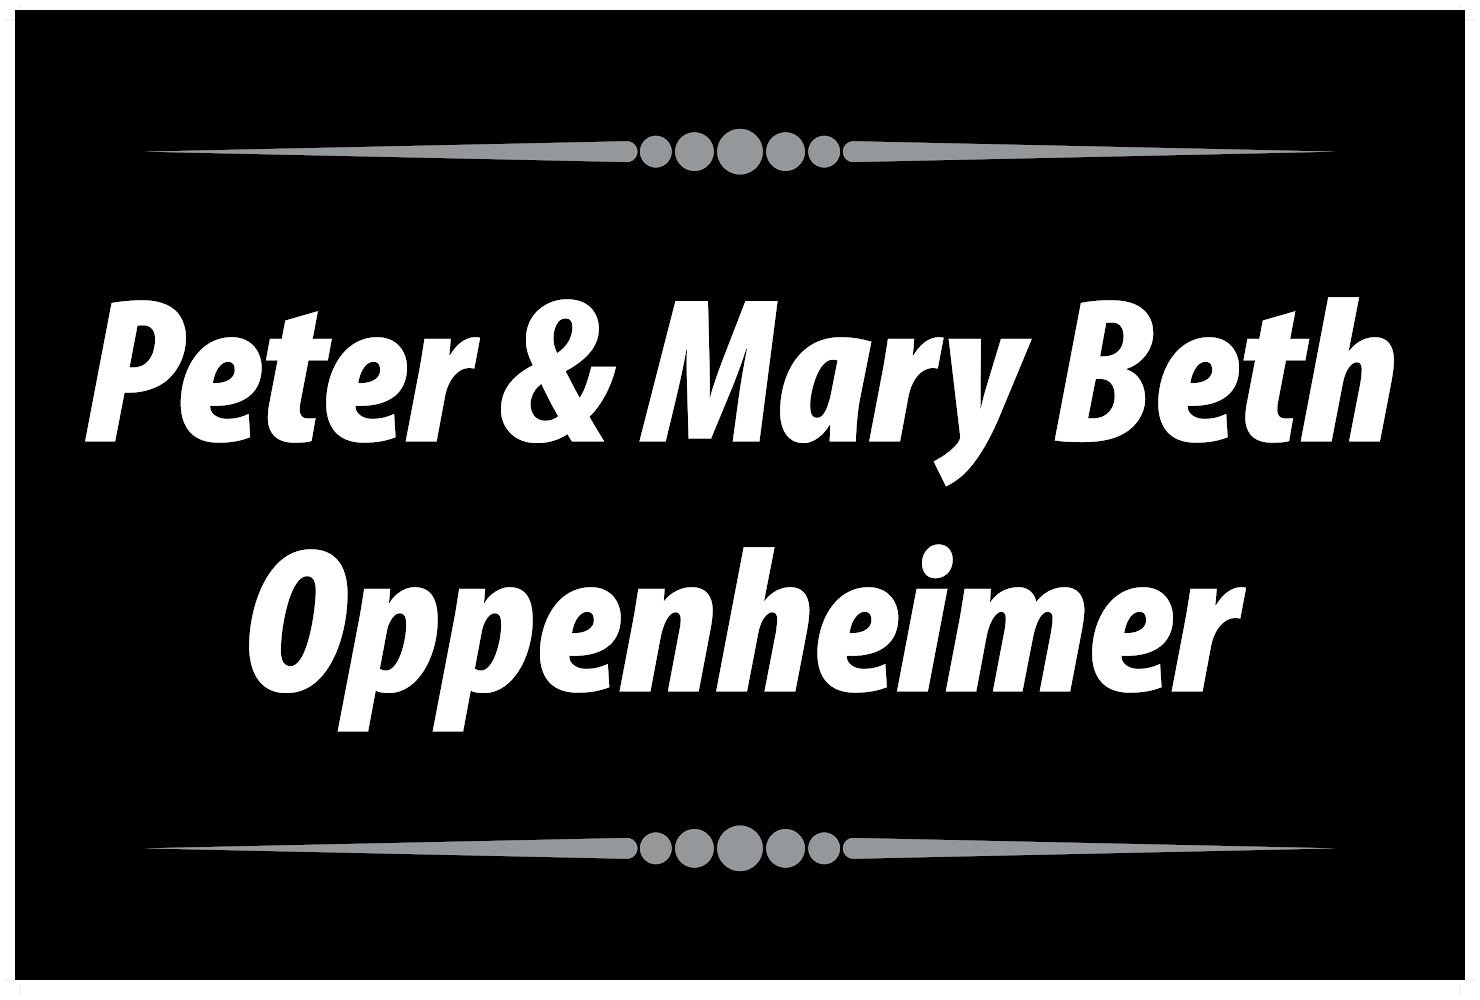 Peter & Mary Beth Oppenheimer - Small